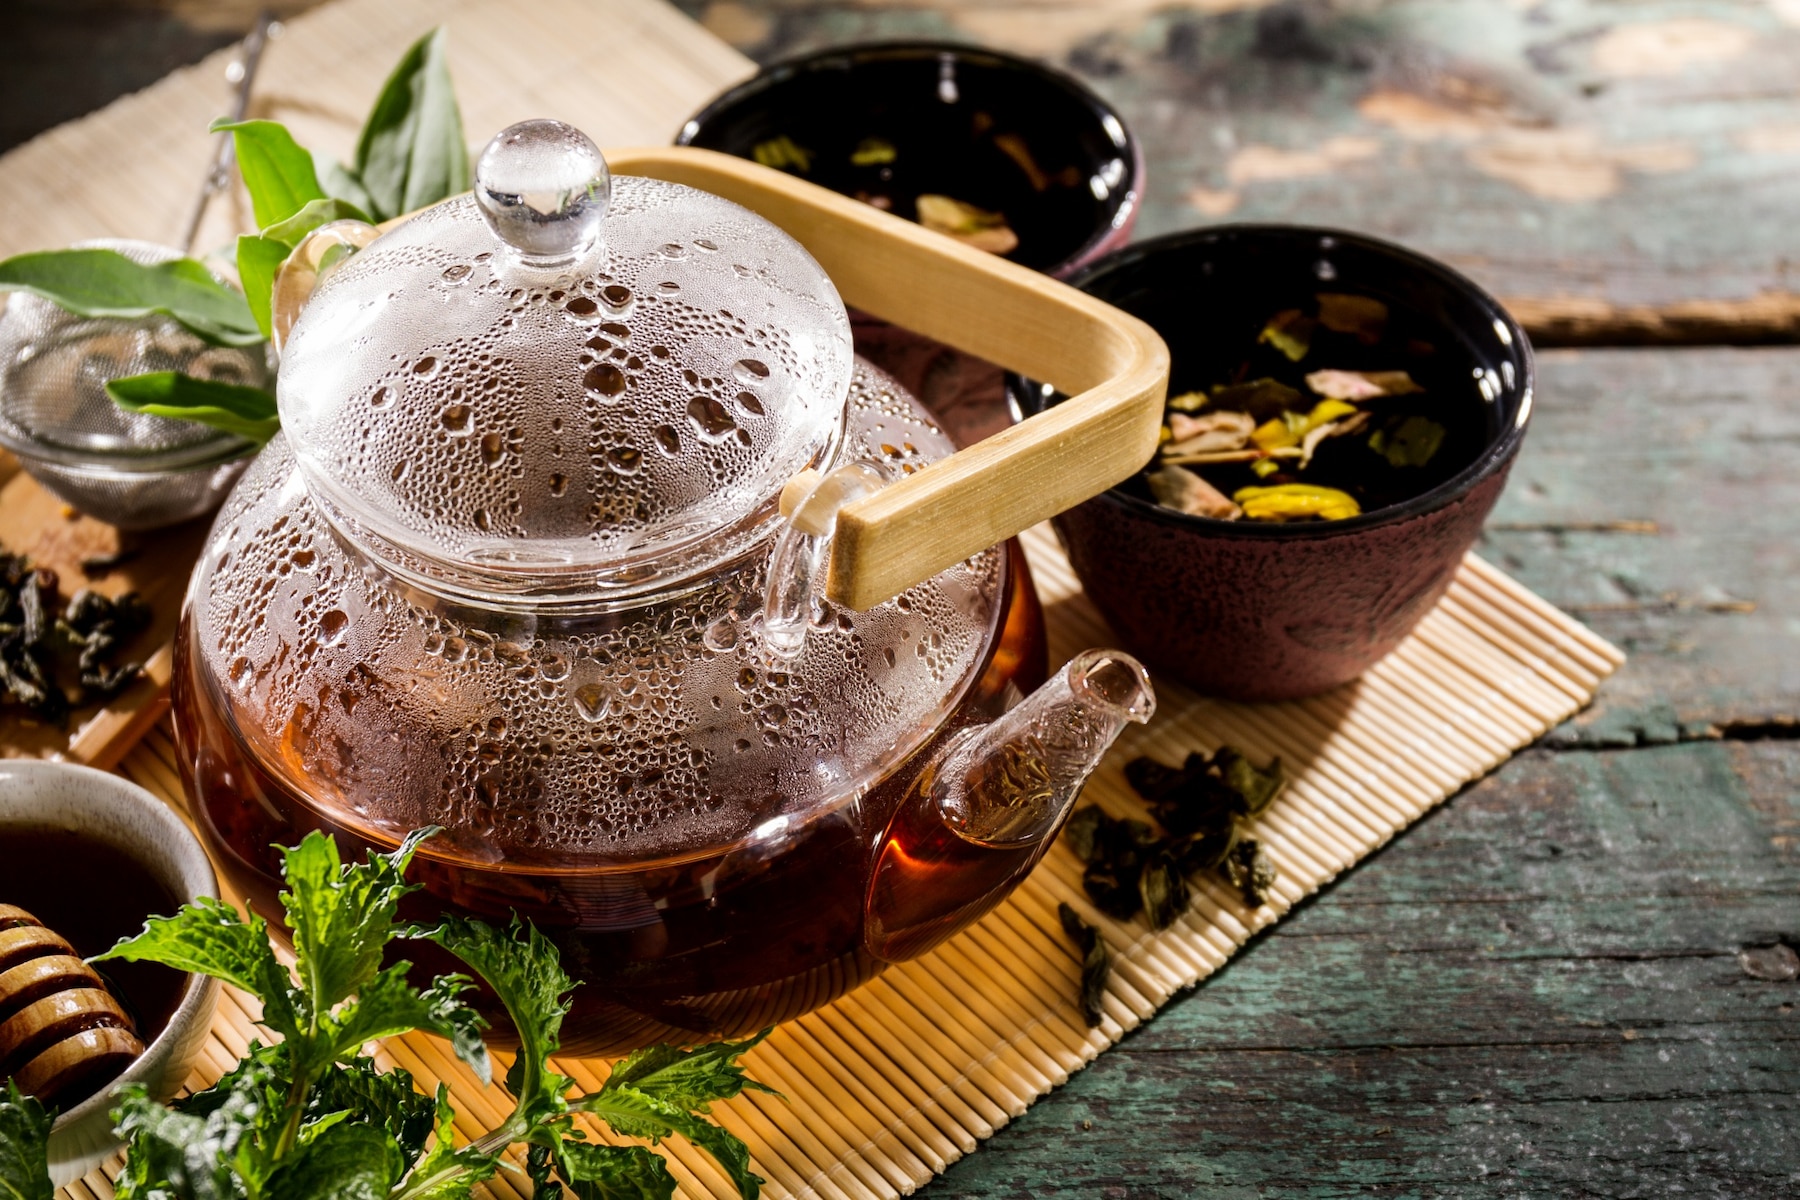 tasty-fresh-green-tea-glass-teapot-ceremony-old-rustic-table_1220-1753.jpg